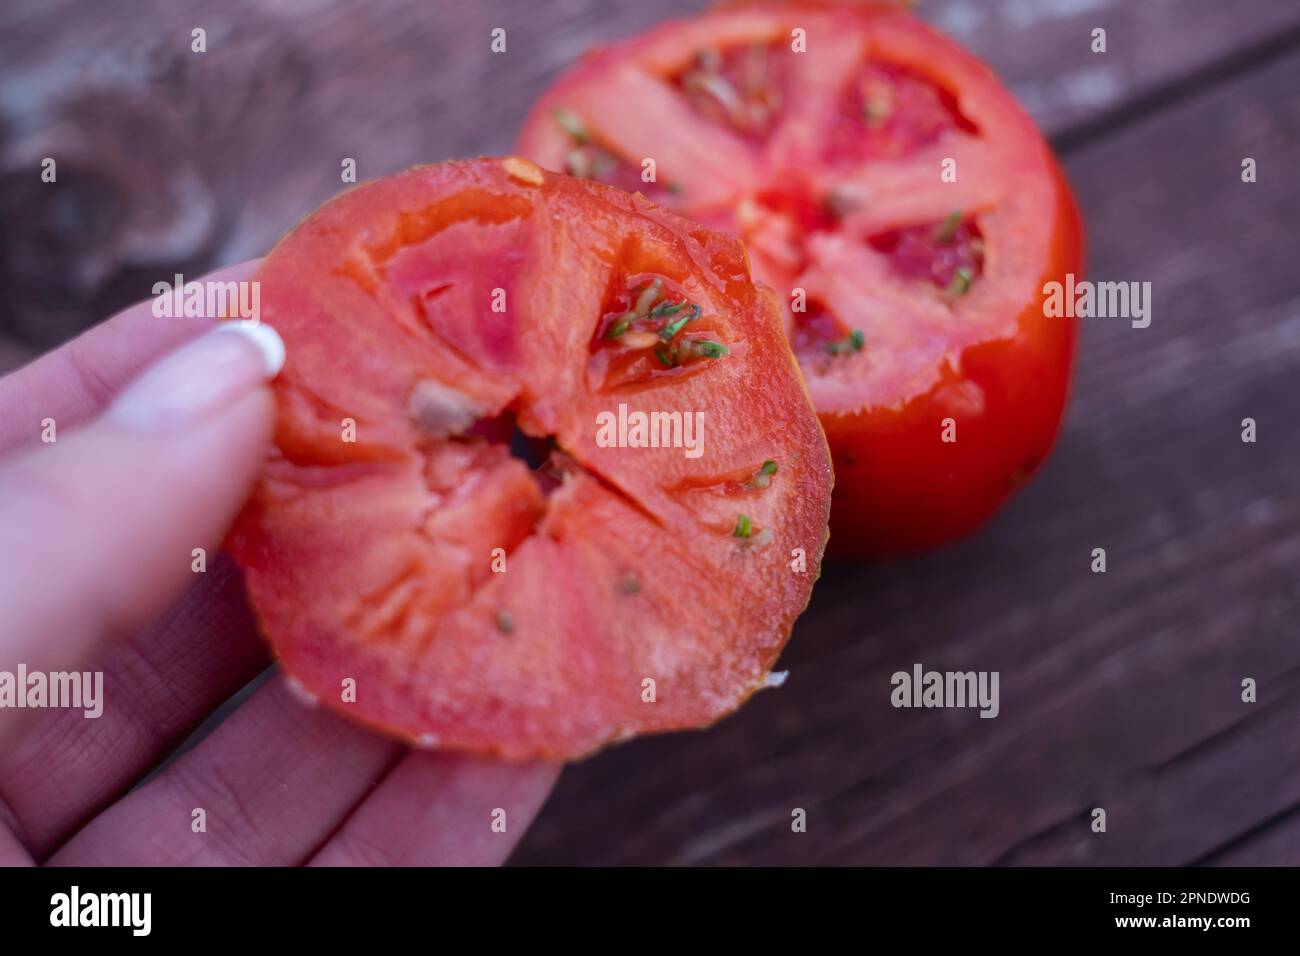 Tomato seeds sprouting inside a ripe tomato. Stock Photo